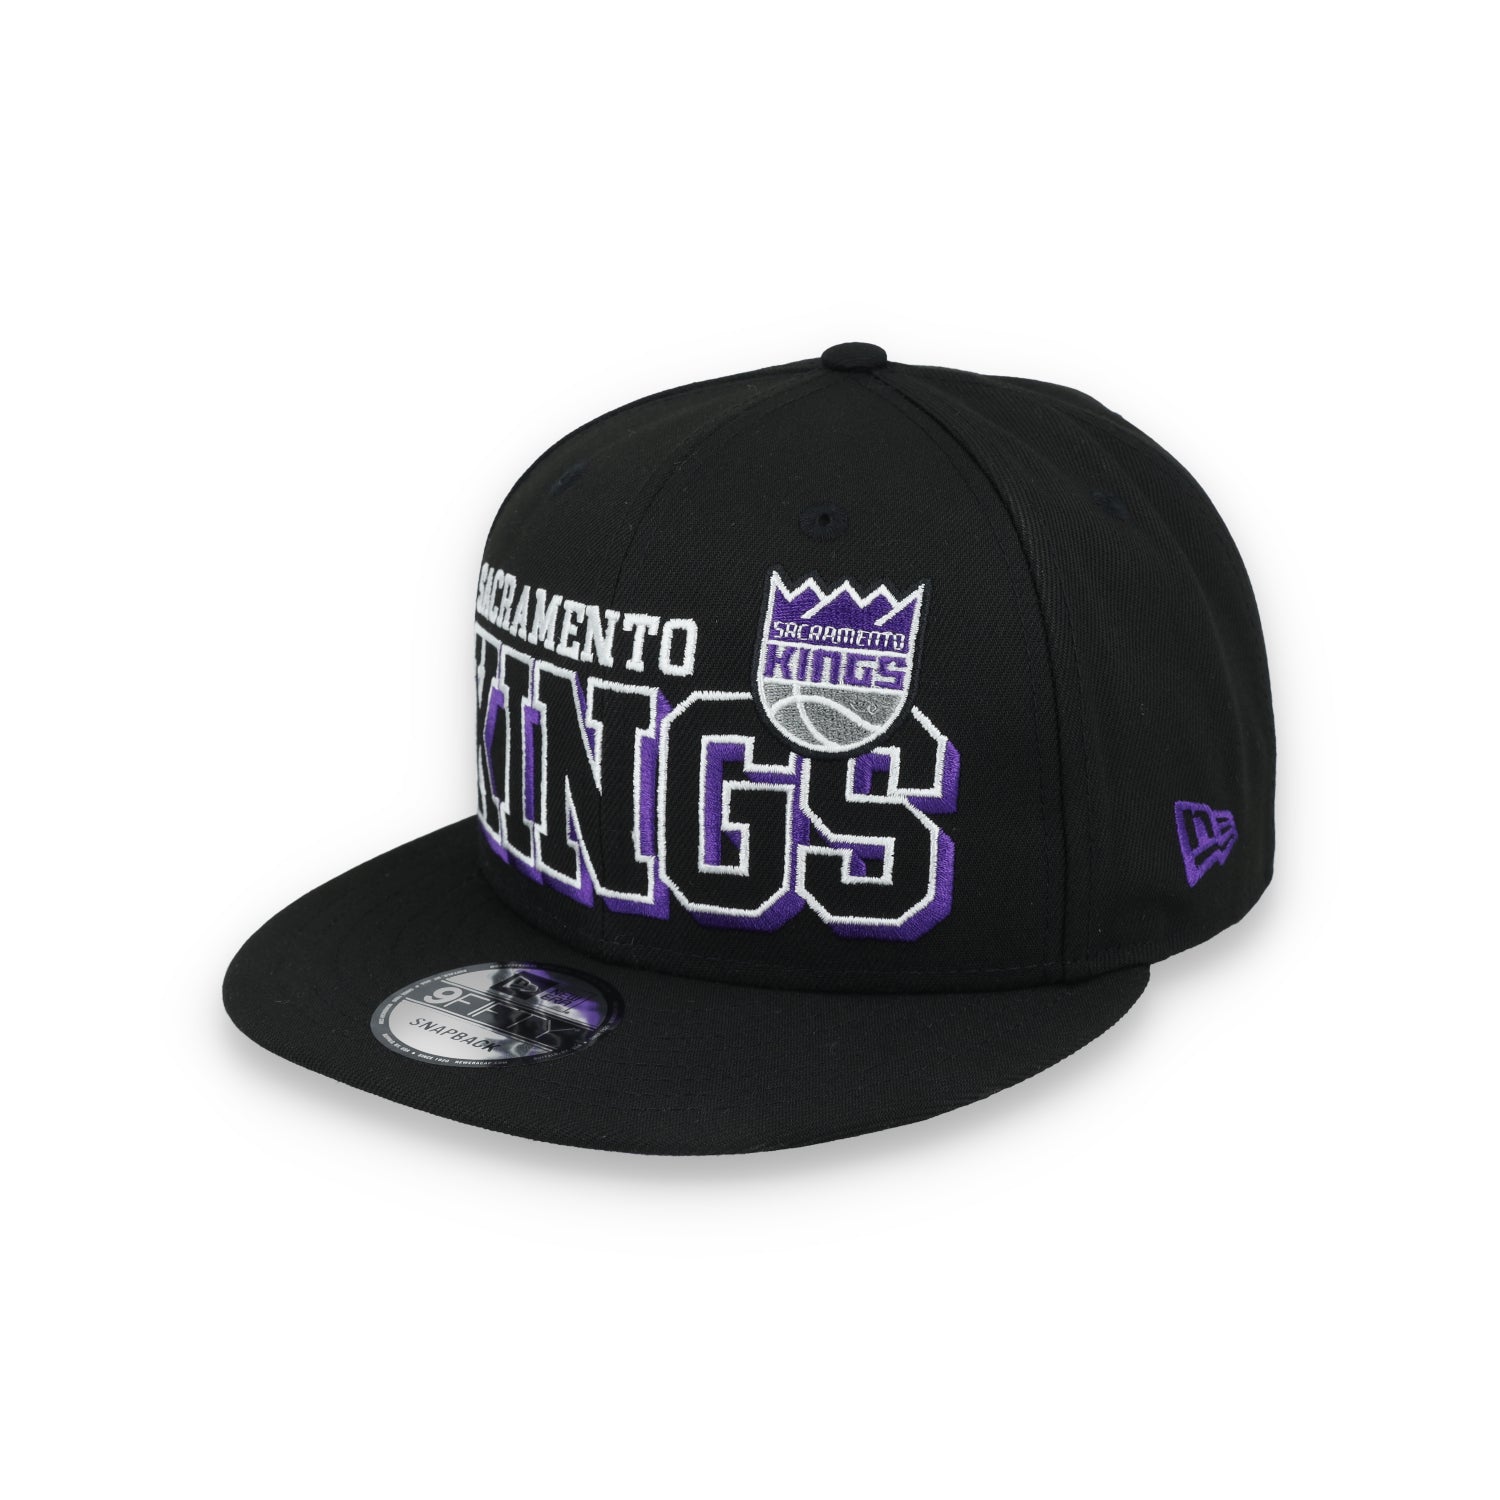 New Era Sacramento Kings Game Day 9FIFTY Snapback Hat